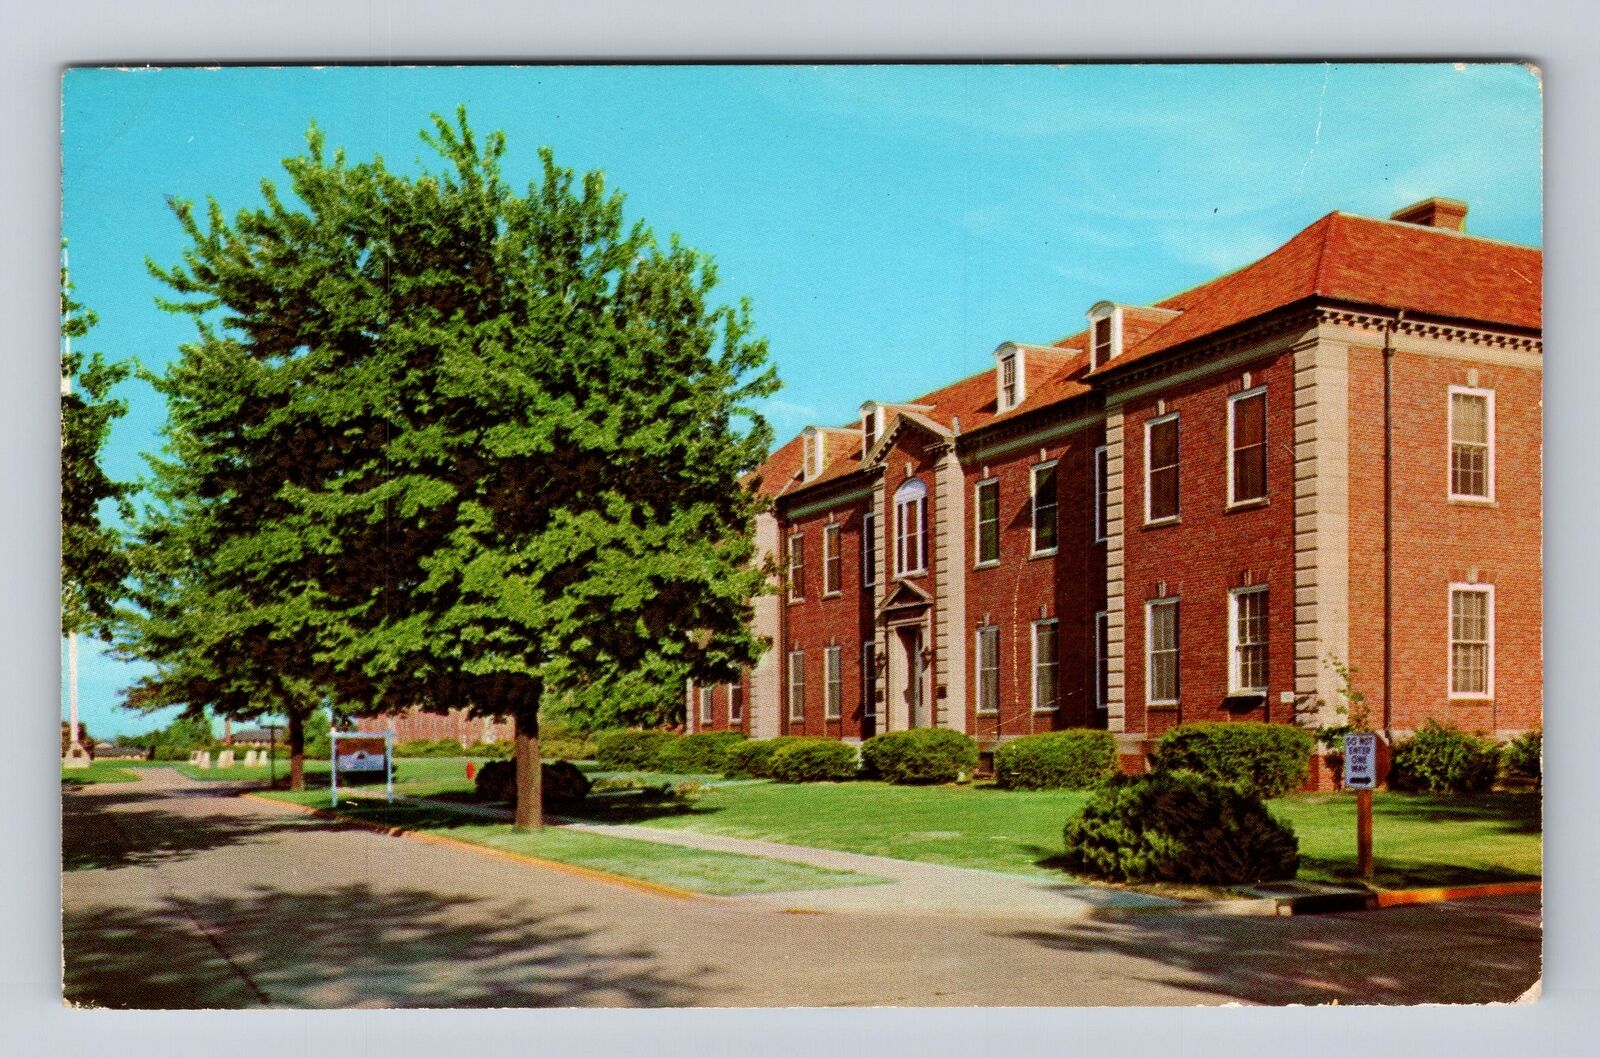 Fort Knox KY-Kentucky, The Armor Center Headquarters, Vintage Souvenir Postcard